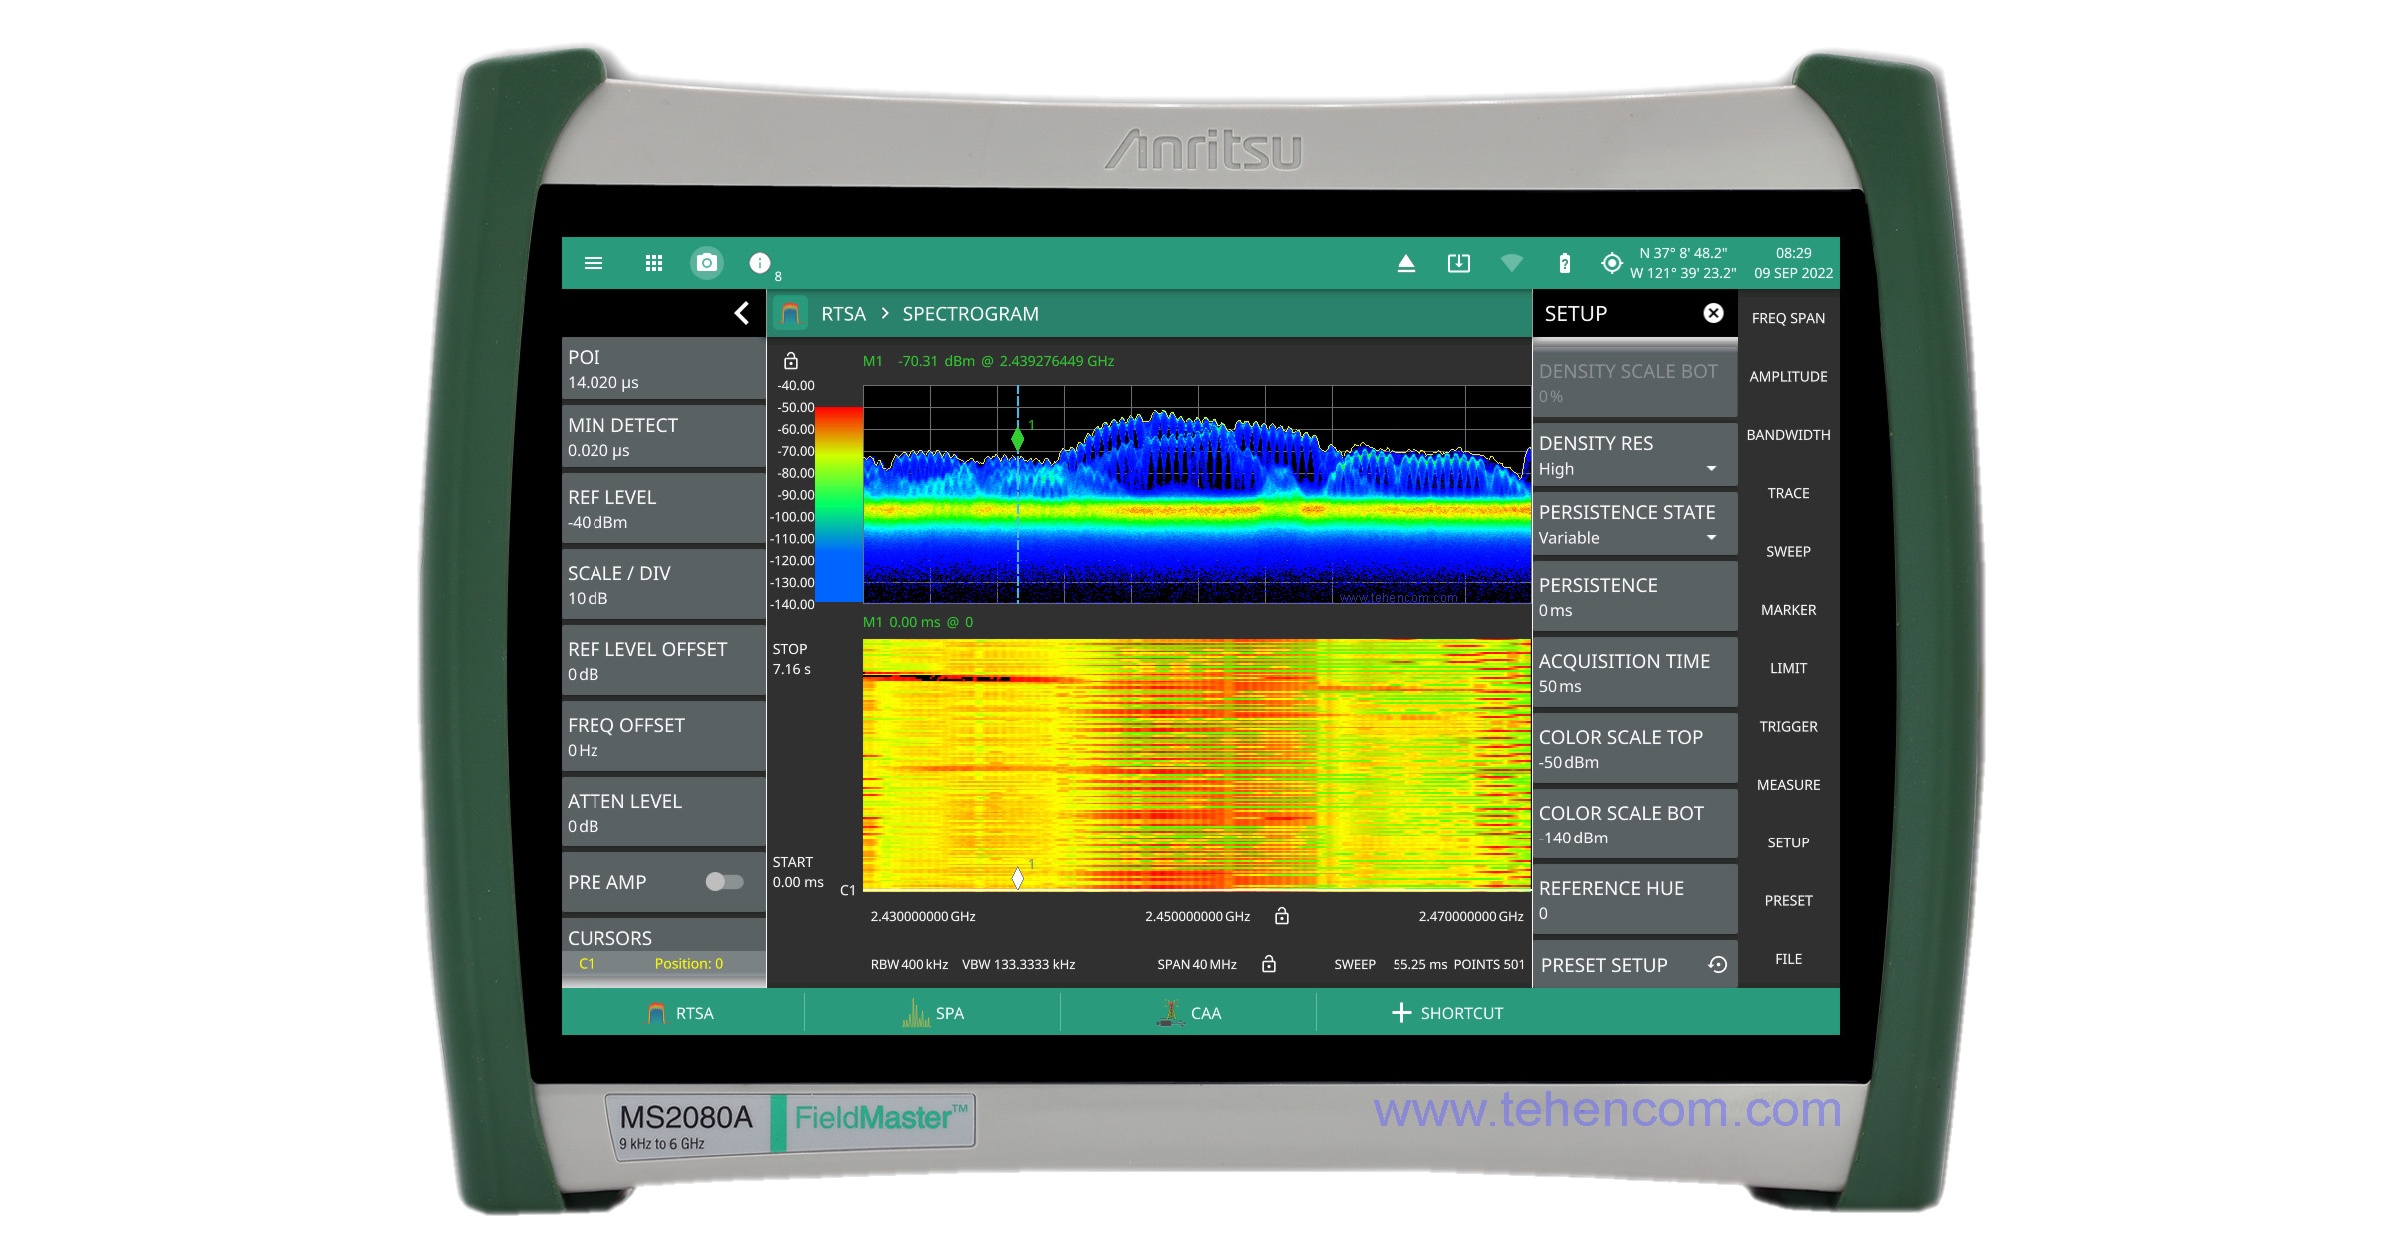 Anritsu MS2080A series of handheld spectrum analyzers